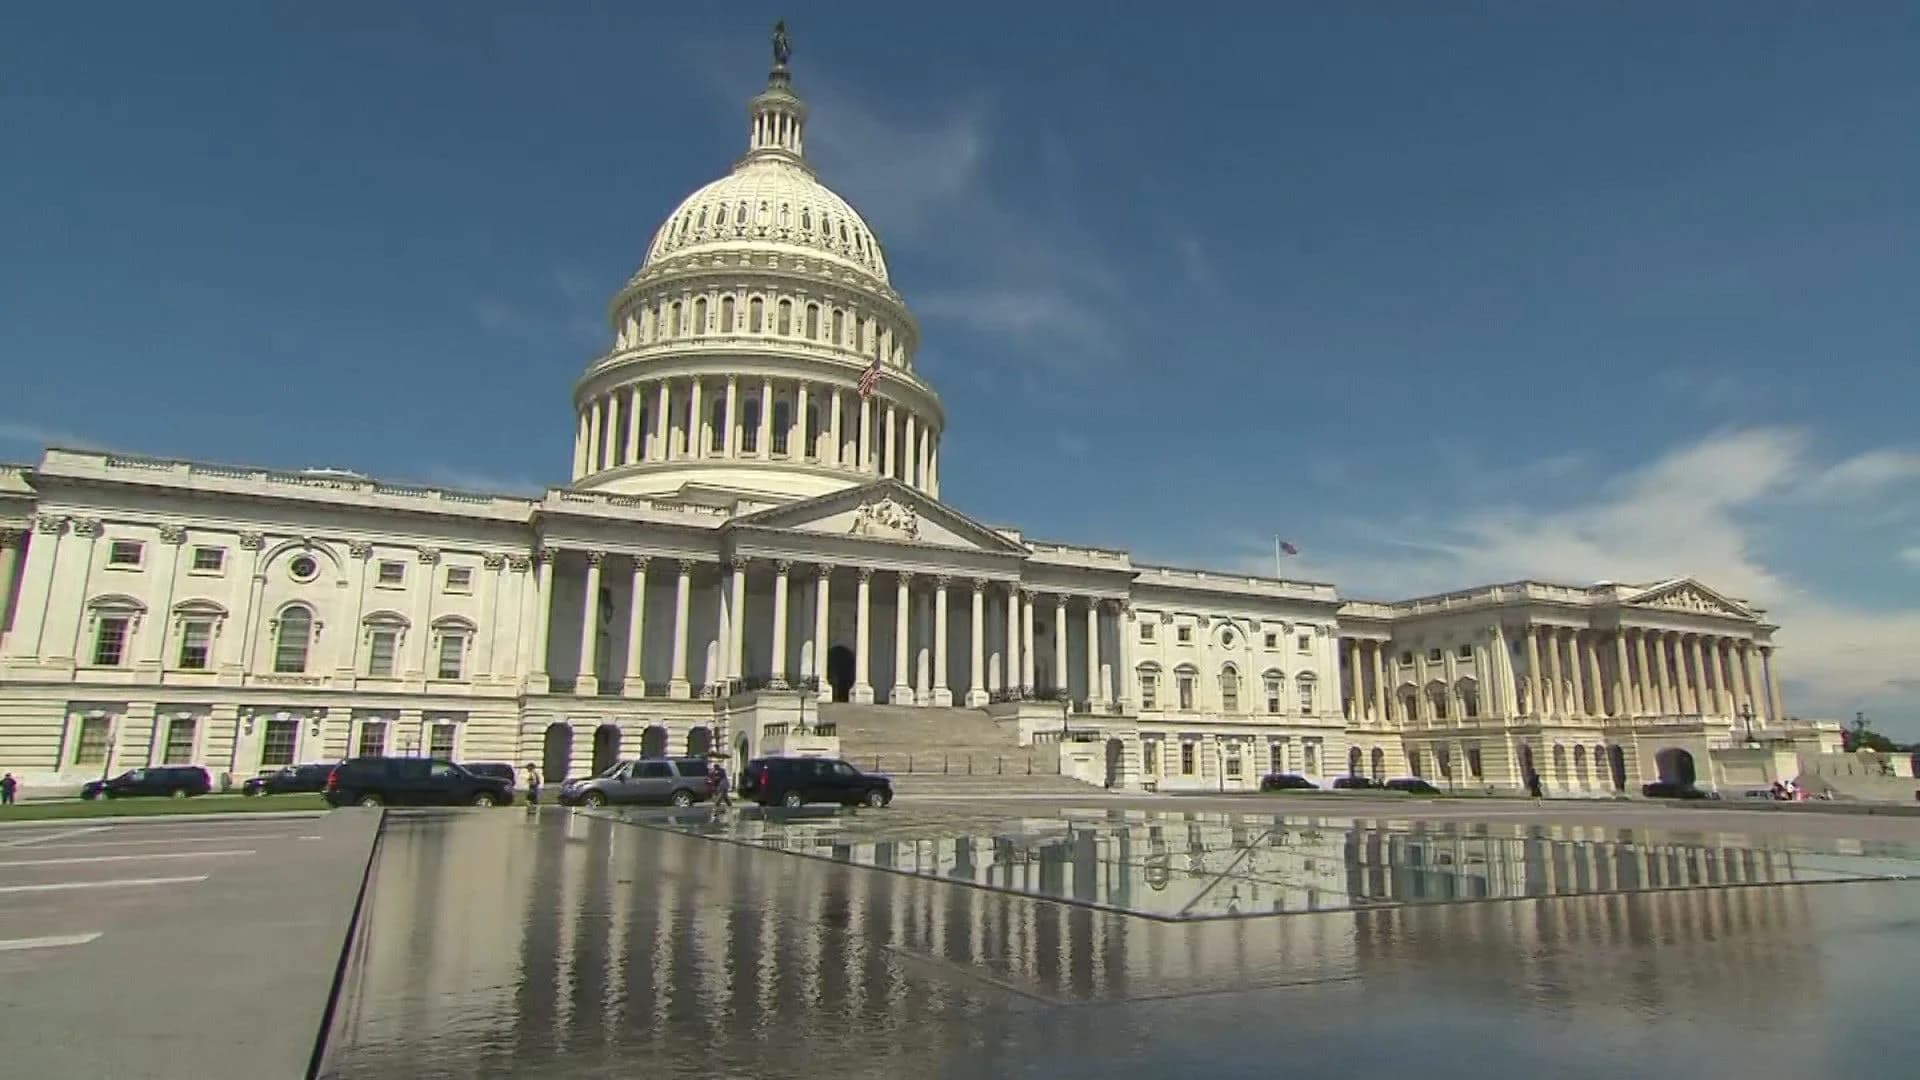 Gov't shutdown seems near; Senate fails to approve funding